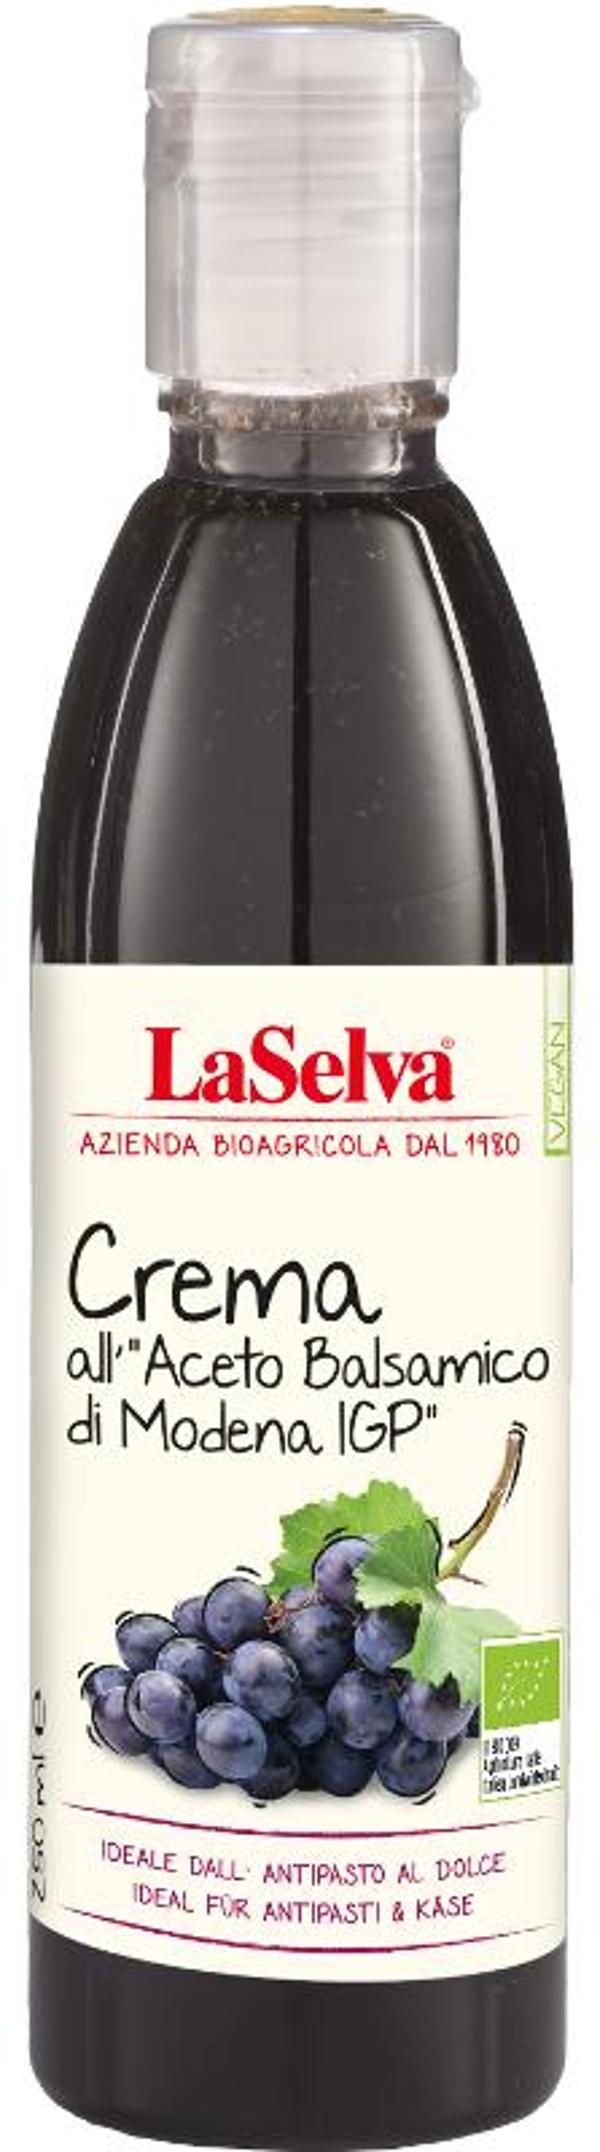 Produktfoto zu Crema con Aceto Balsamico